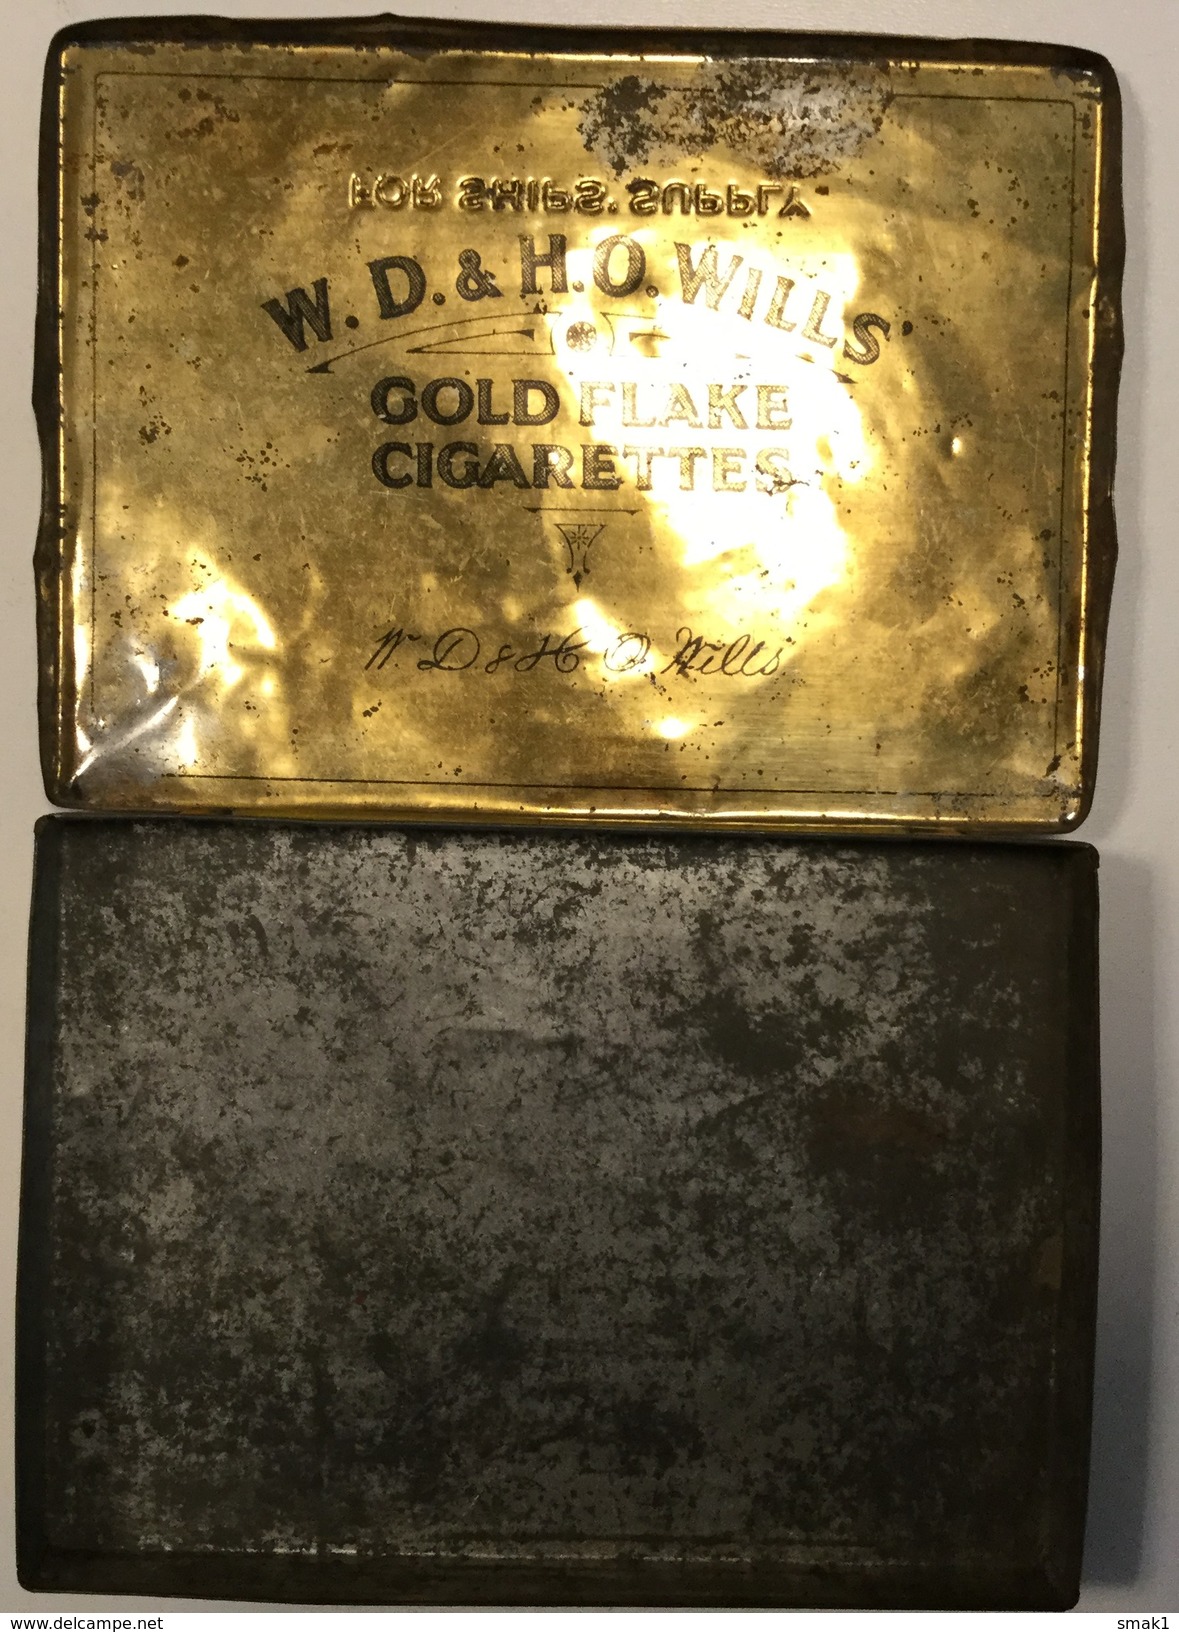 EMPTY  TOBACCO  BOX    TIN     GOLD FLAKE   W.D. & H.O. WILLS  HONEY DEW - Cajas Para Tabaco (vacios)